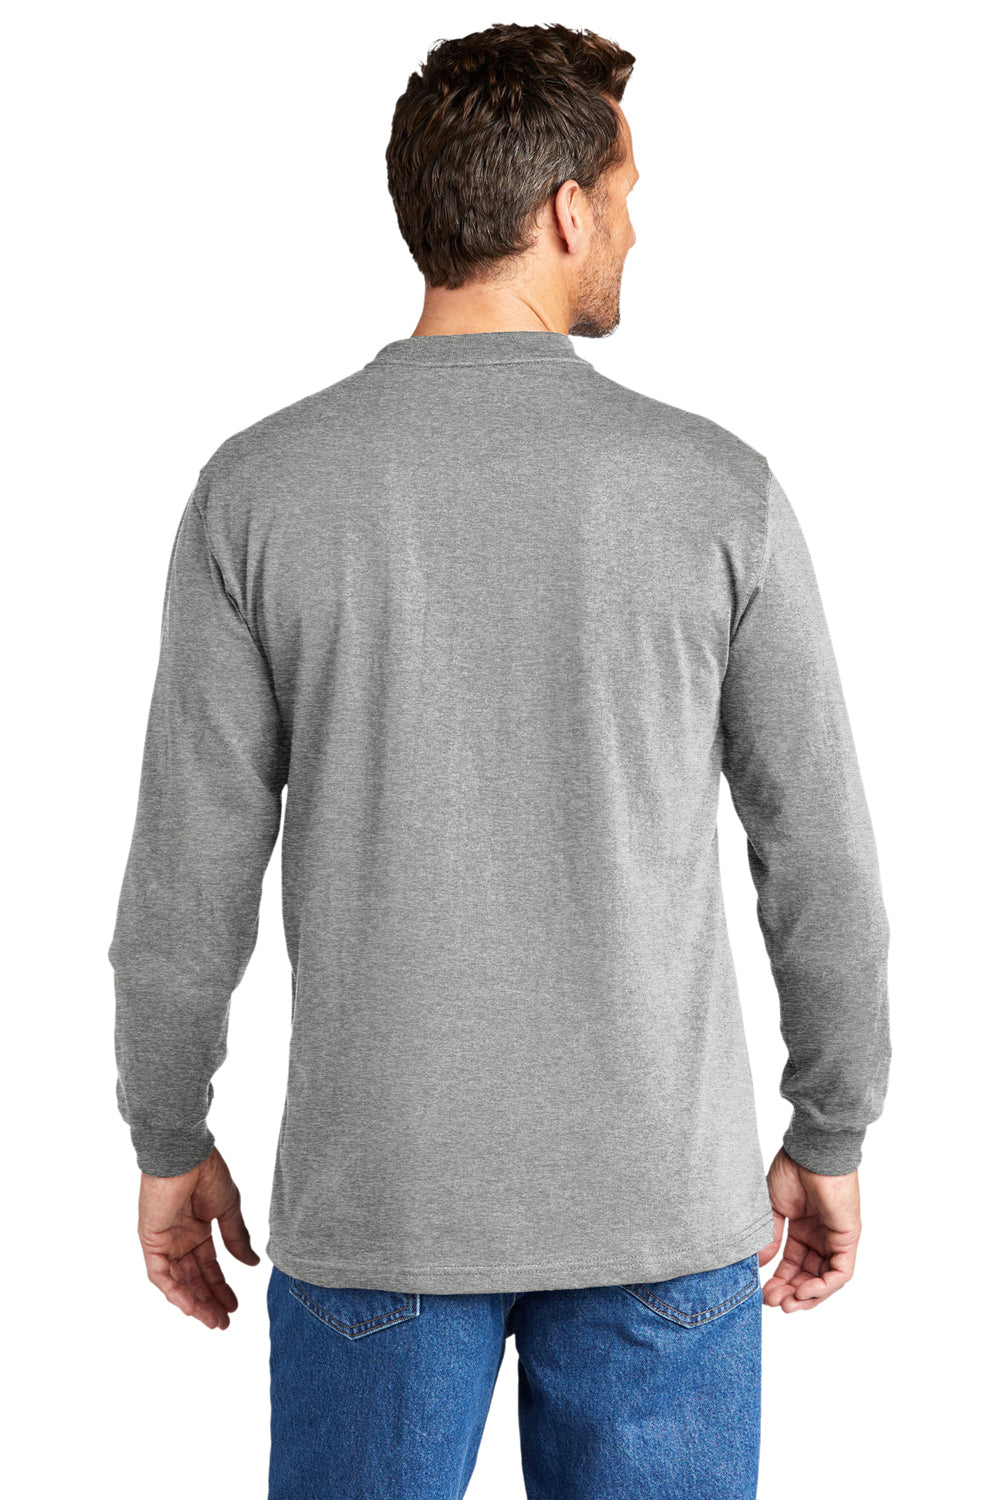 Carhartt CTK128 Mens Long Sleeve Henley T-Shirt w/ Pocket Heather Grey Model Back